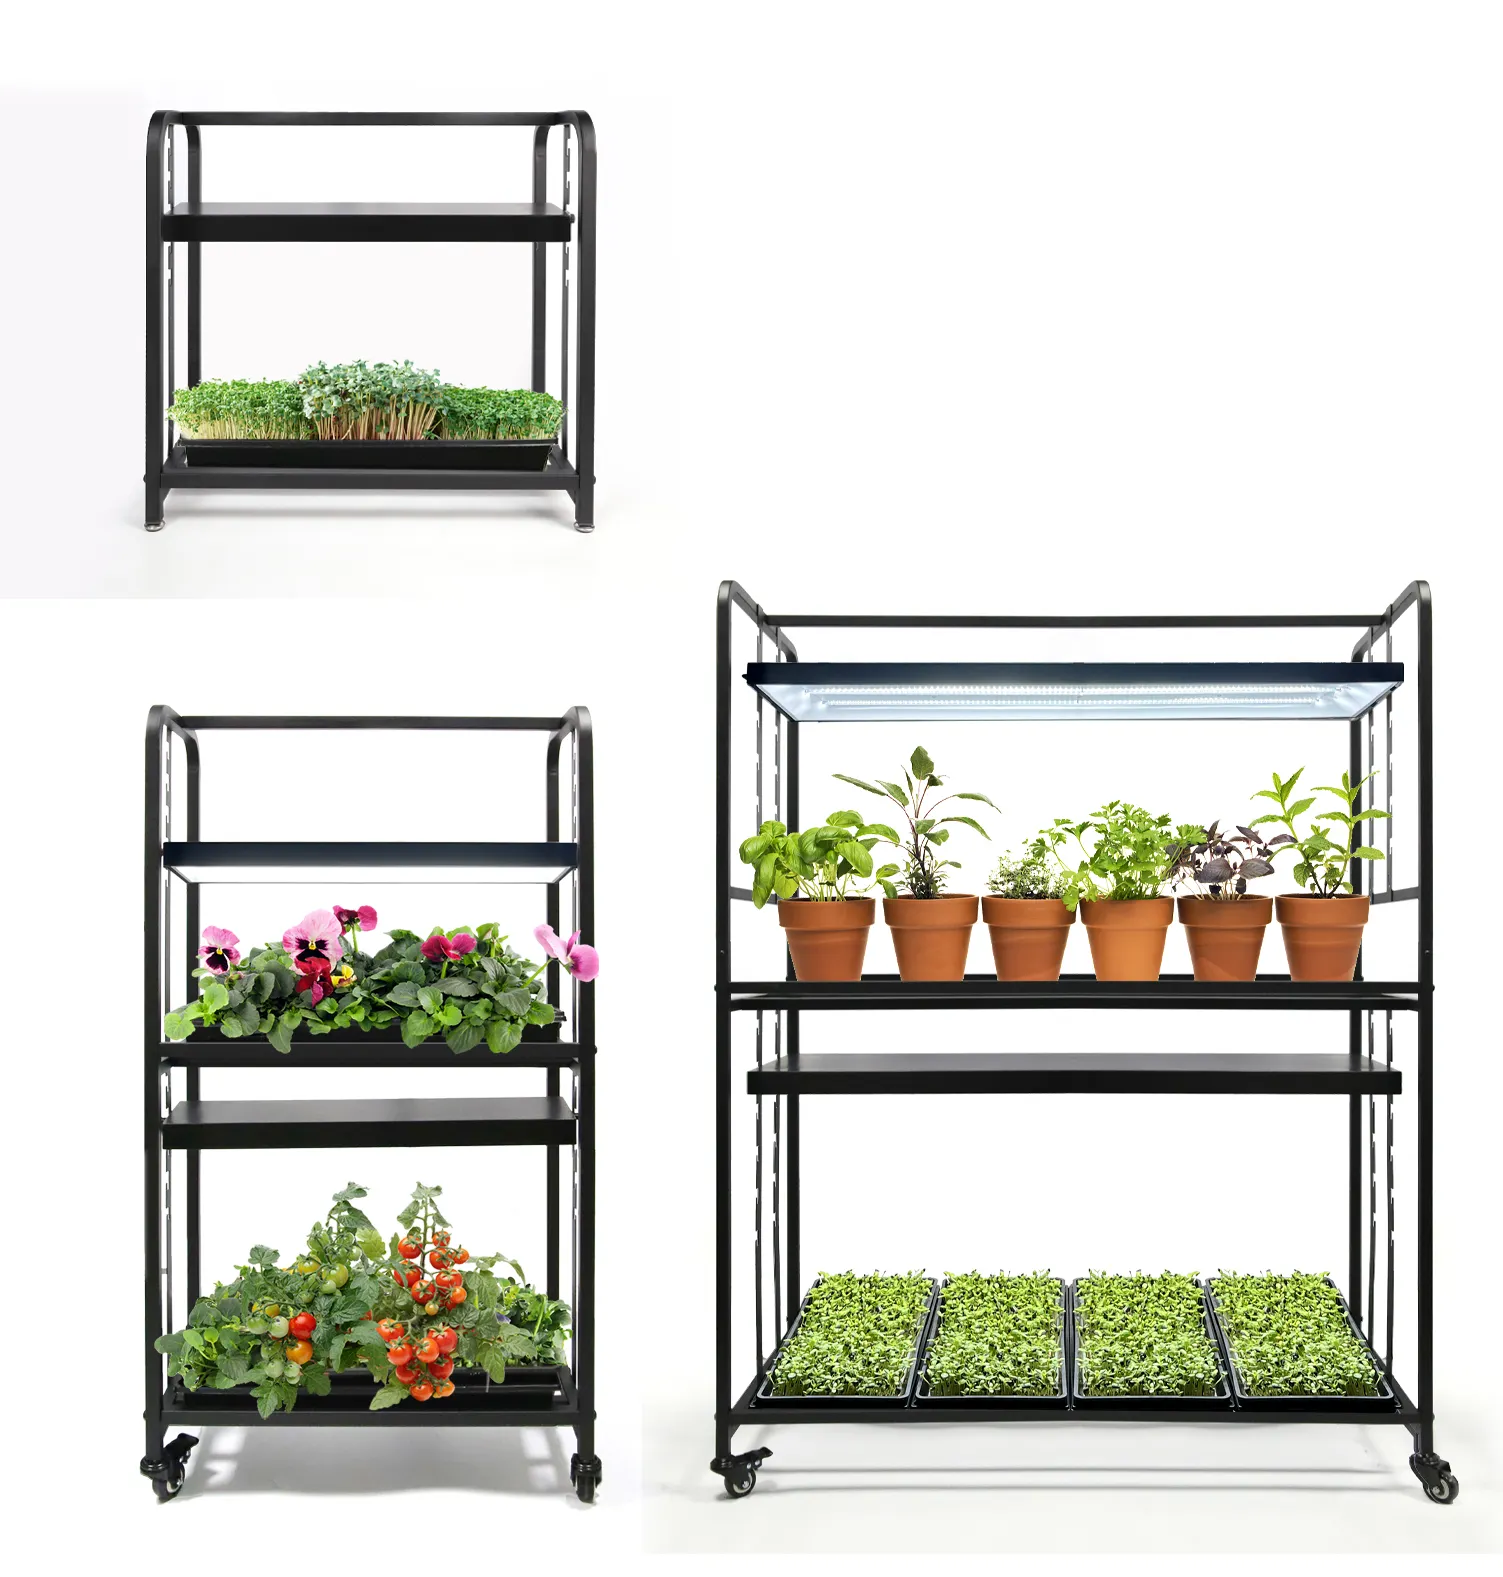 3 optional Indoor garden plant stand kitchen garden shelf with led full spectrum light for seed starting  succulent  herbs